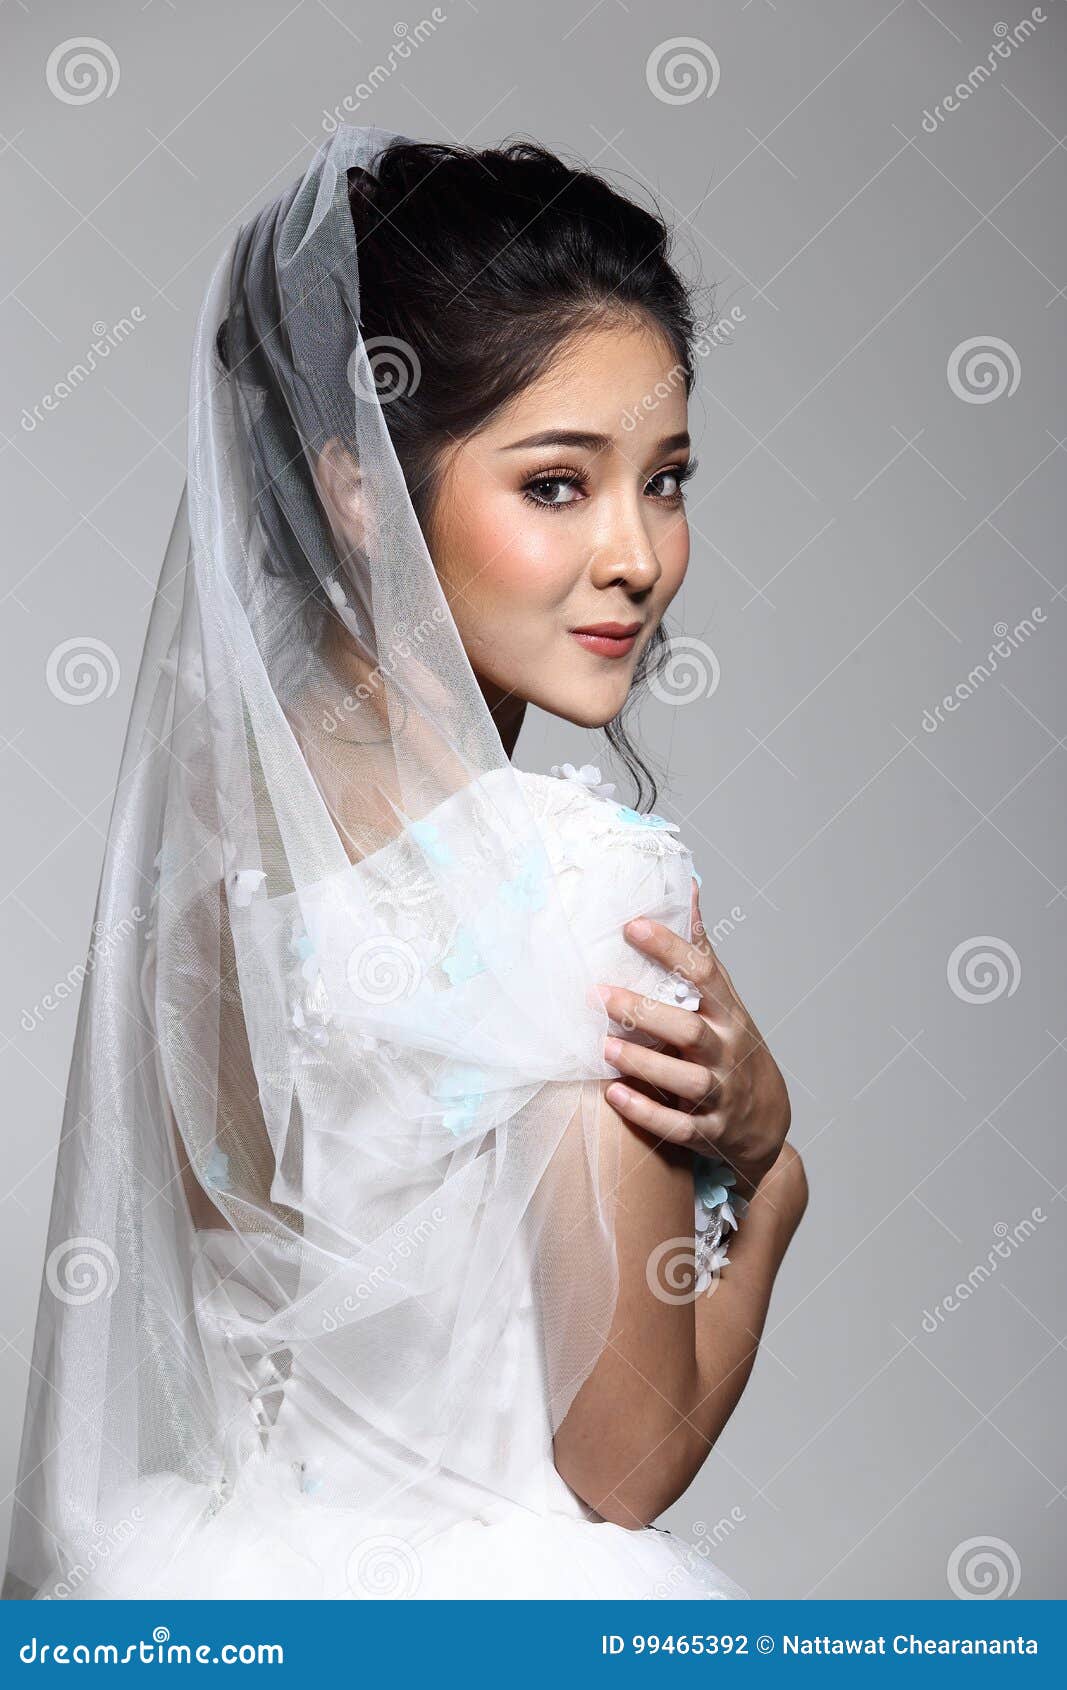 https://thumbs.dreamstime.com/z/lovely-asian-beautiful-woman-bride-white-wedding-gown-dress-w-portrait-head-shot-lovely-asian-beautiful-woman-bride-white-99465392.jpg